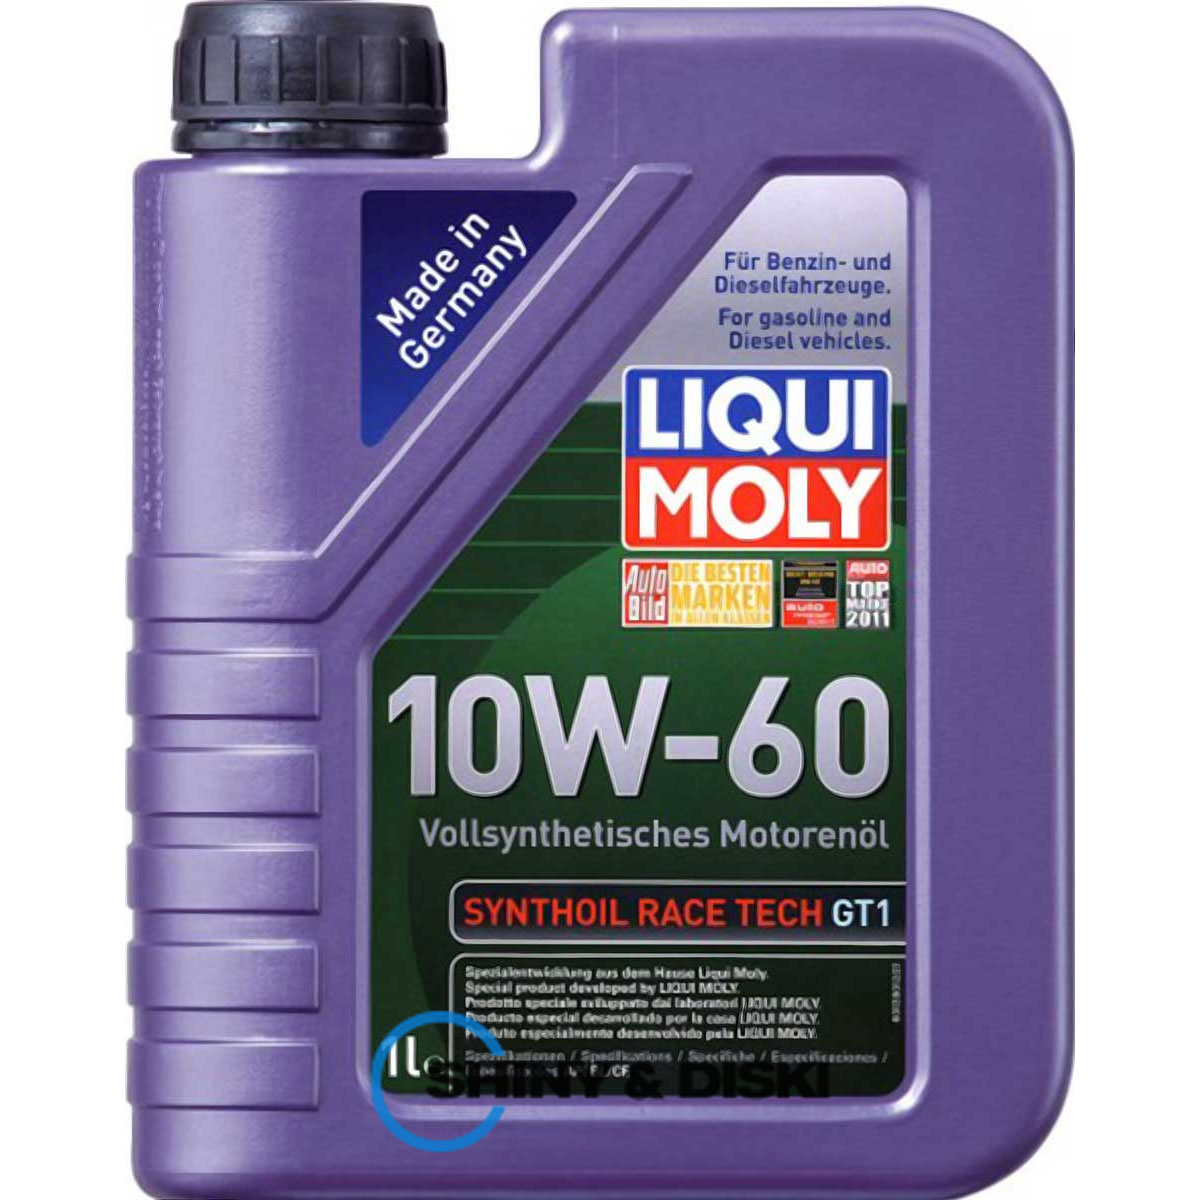 liqui moly synthoil race tech gt1 10w-60 (1л)